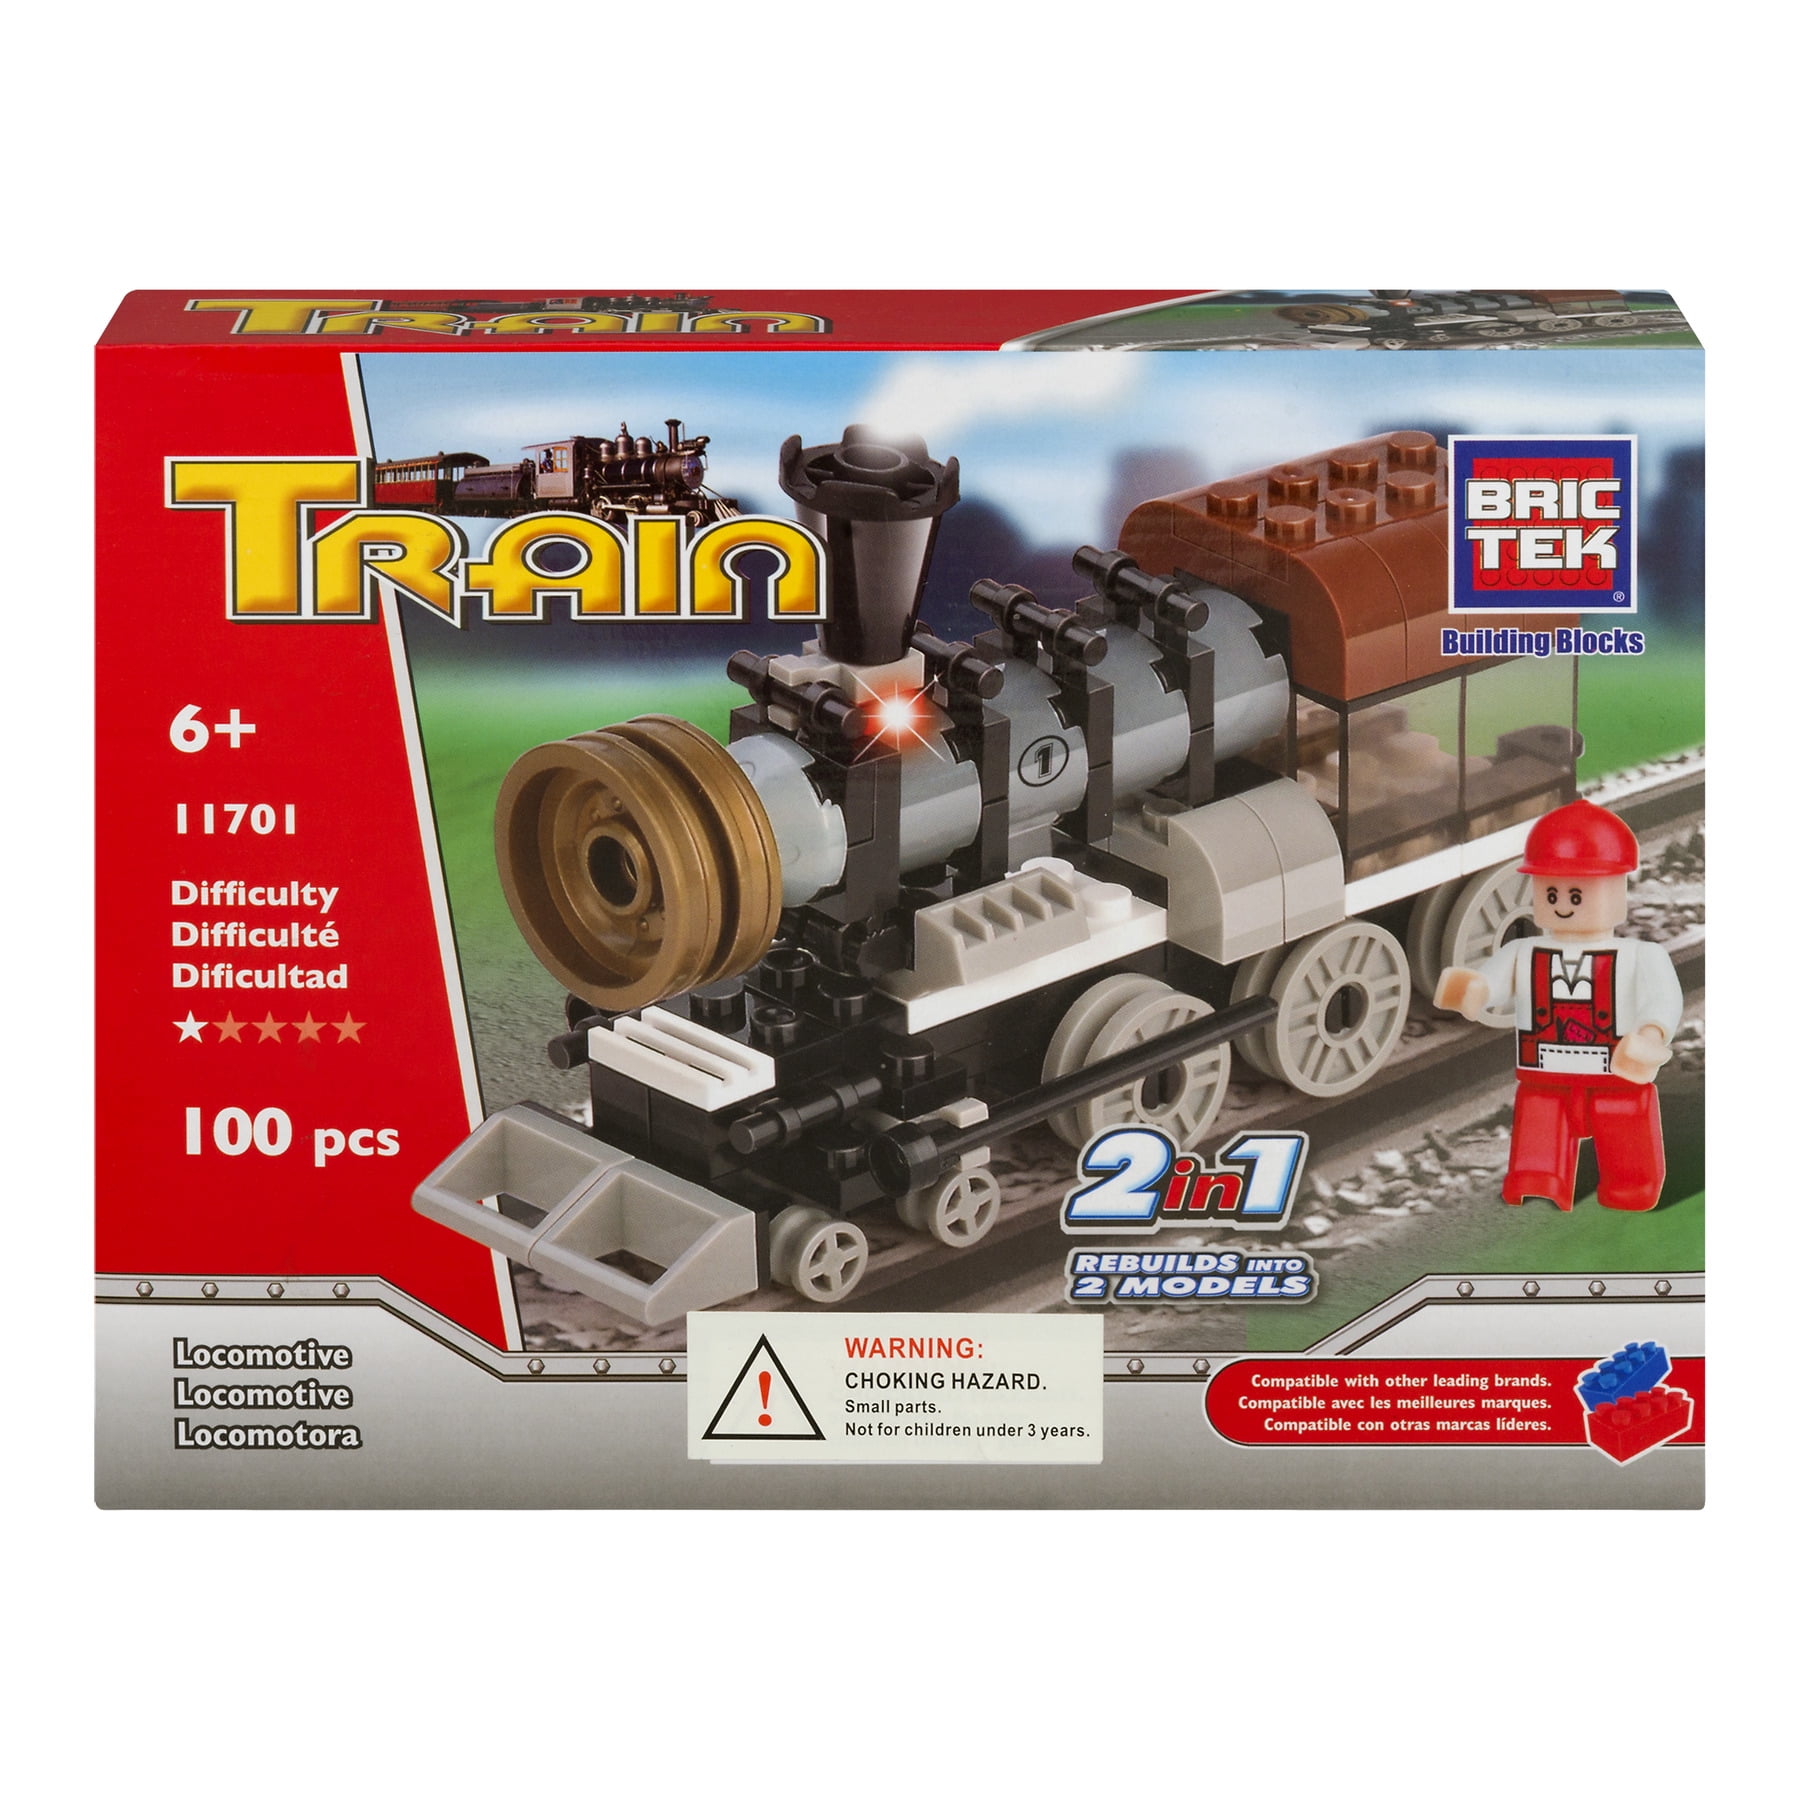 Locomotive 2 in 1 Train BricTek Building Block Construction Toy Brick 